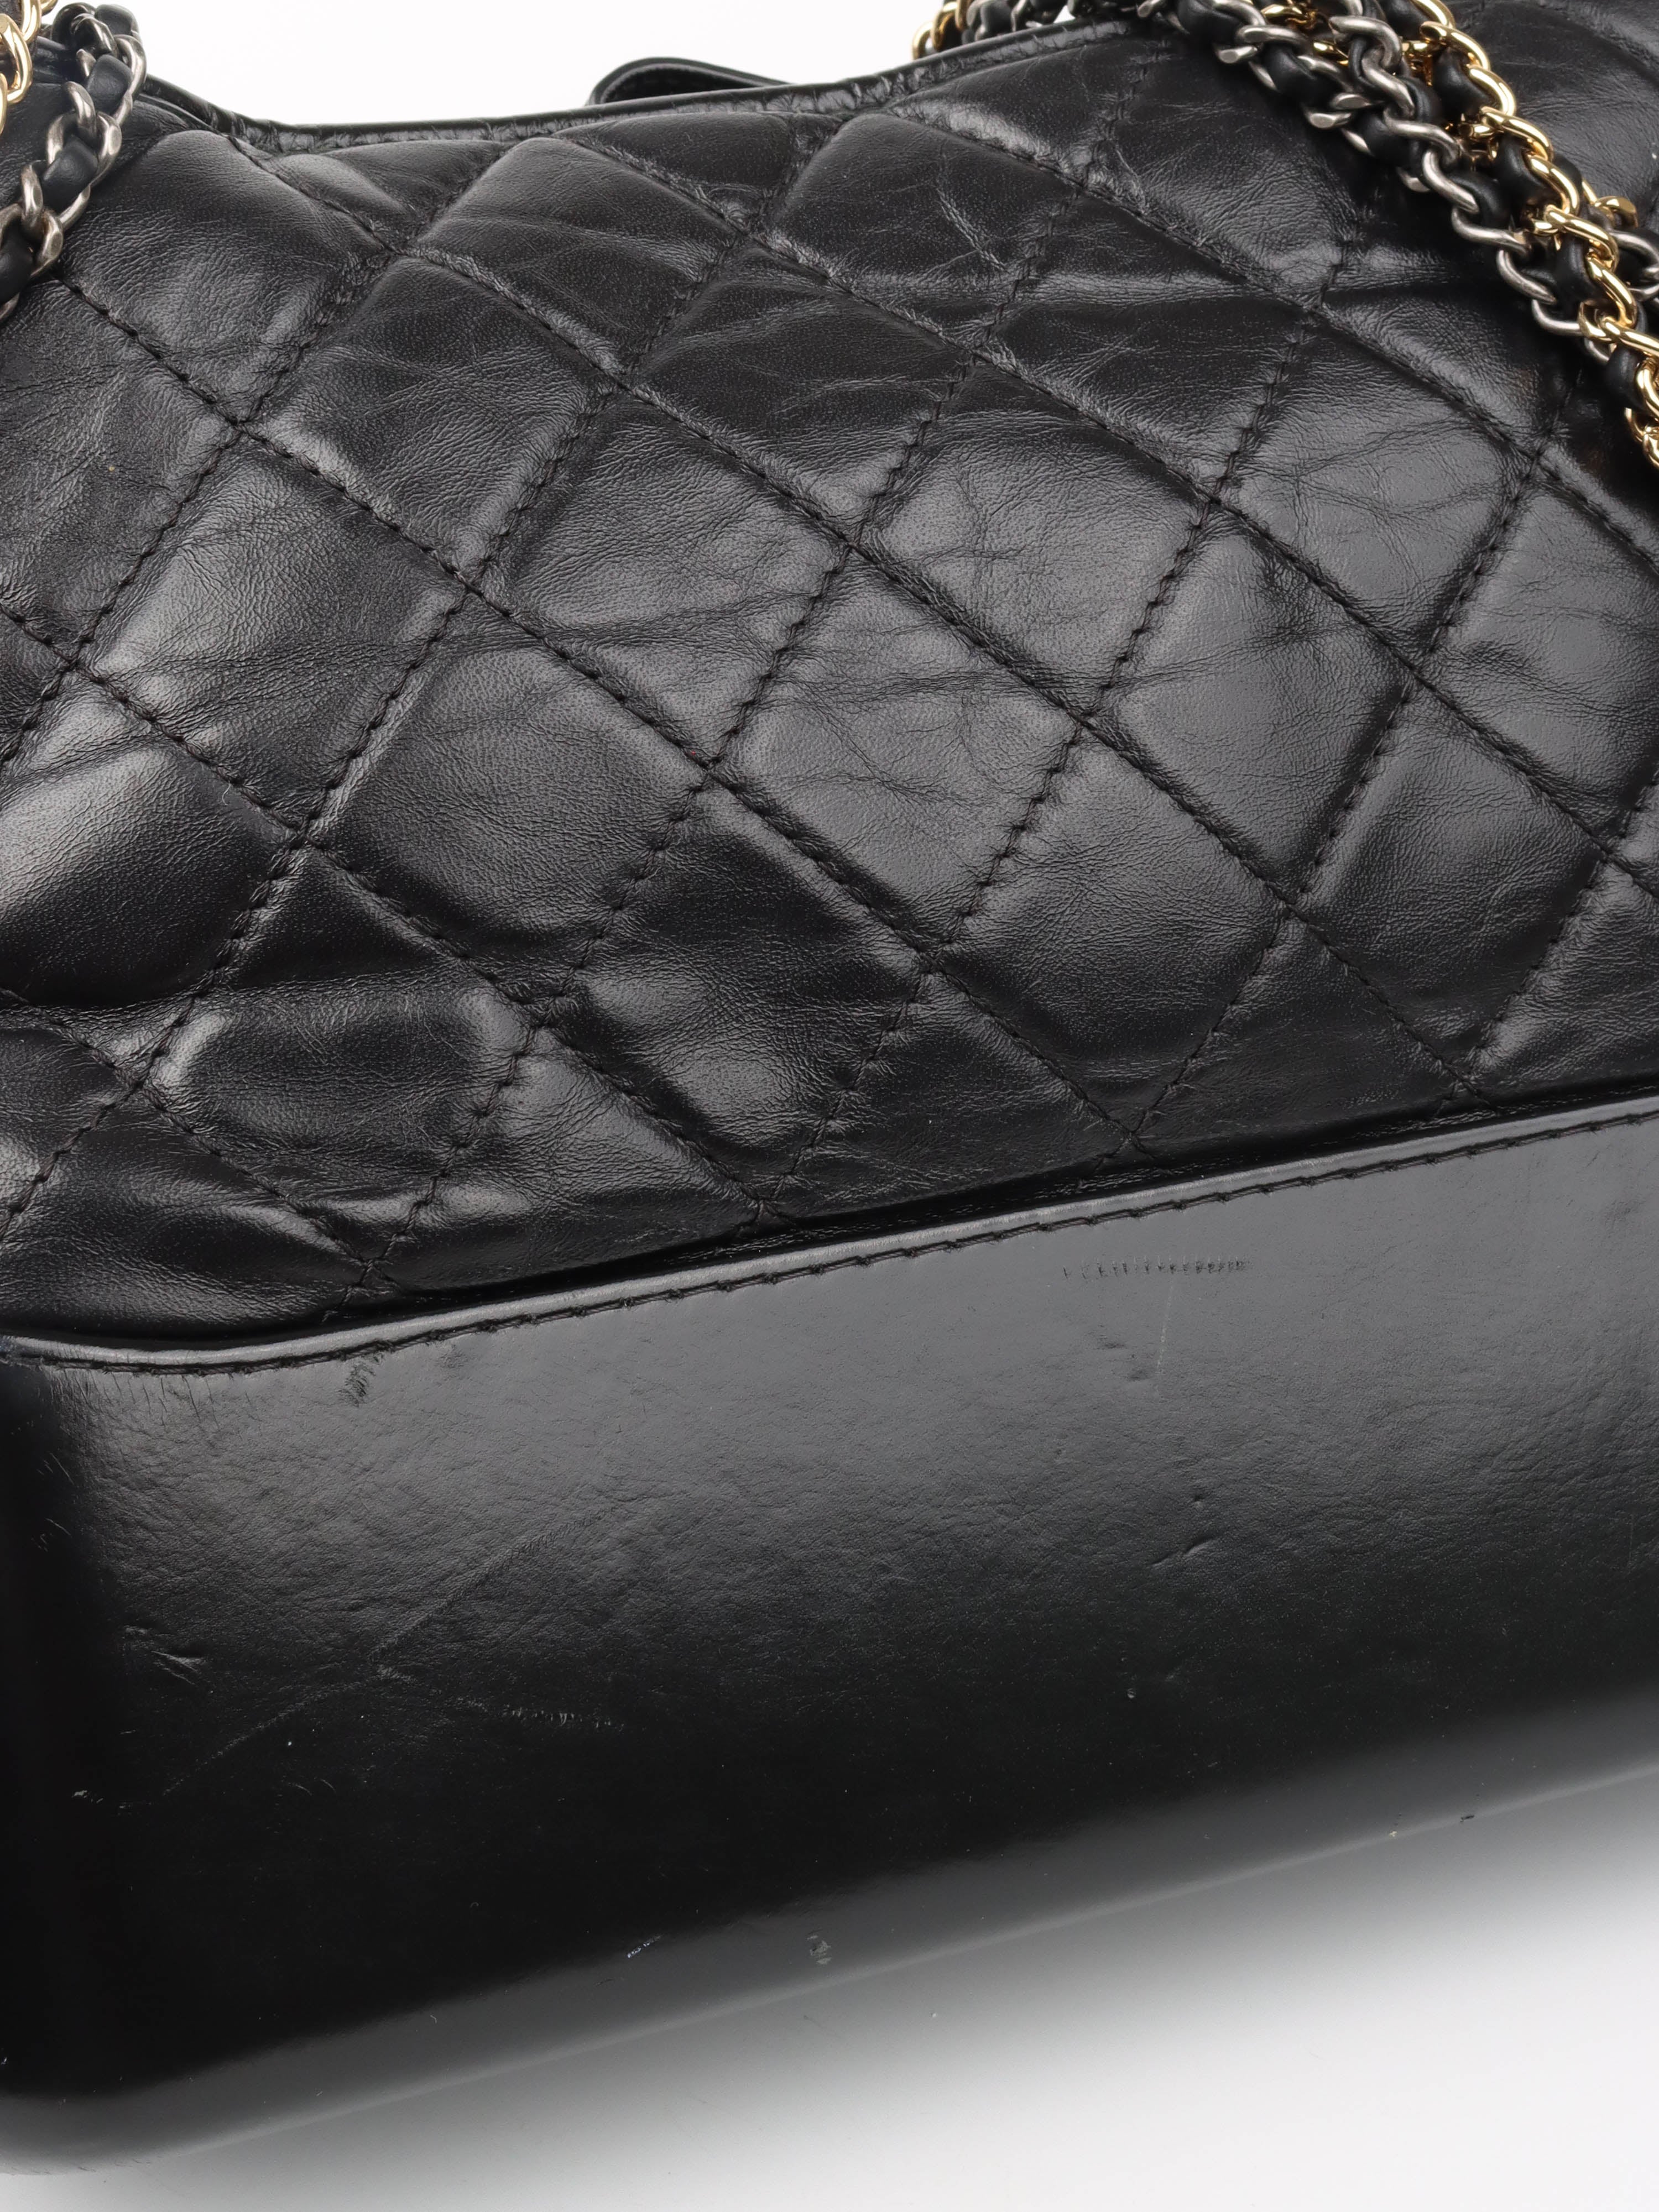 Chanel Medium Black Gabrielle Bag